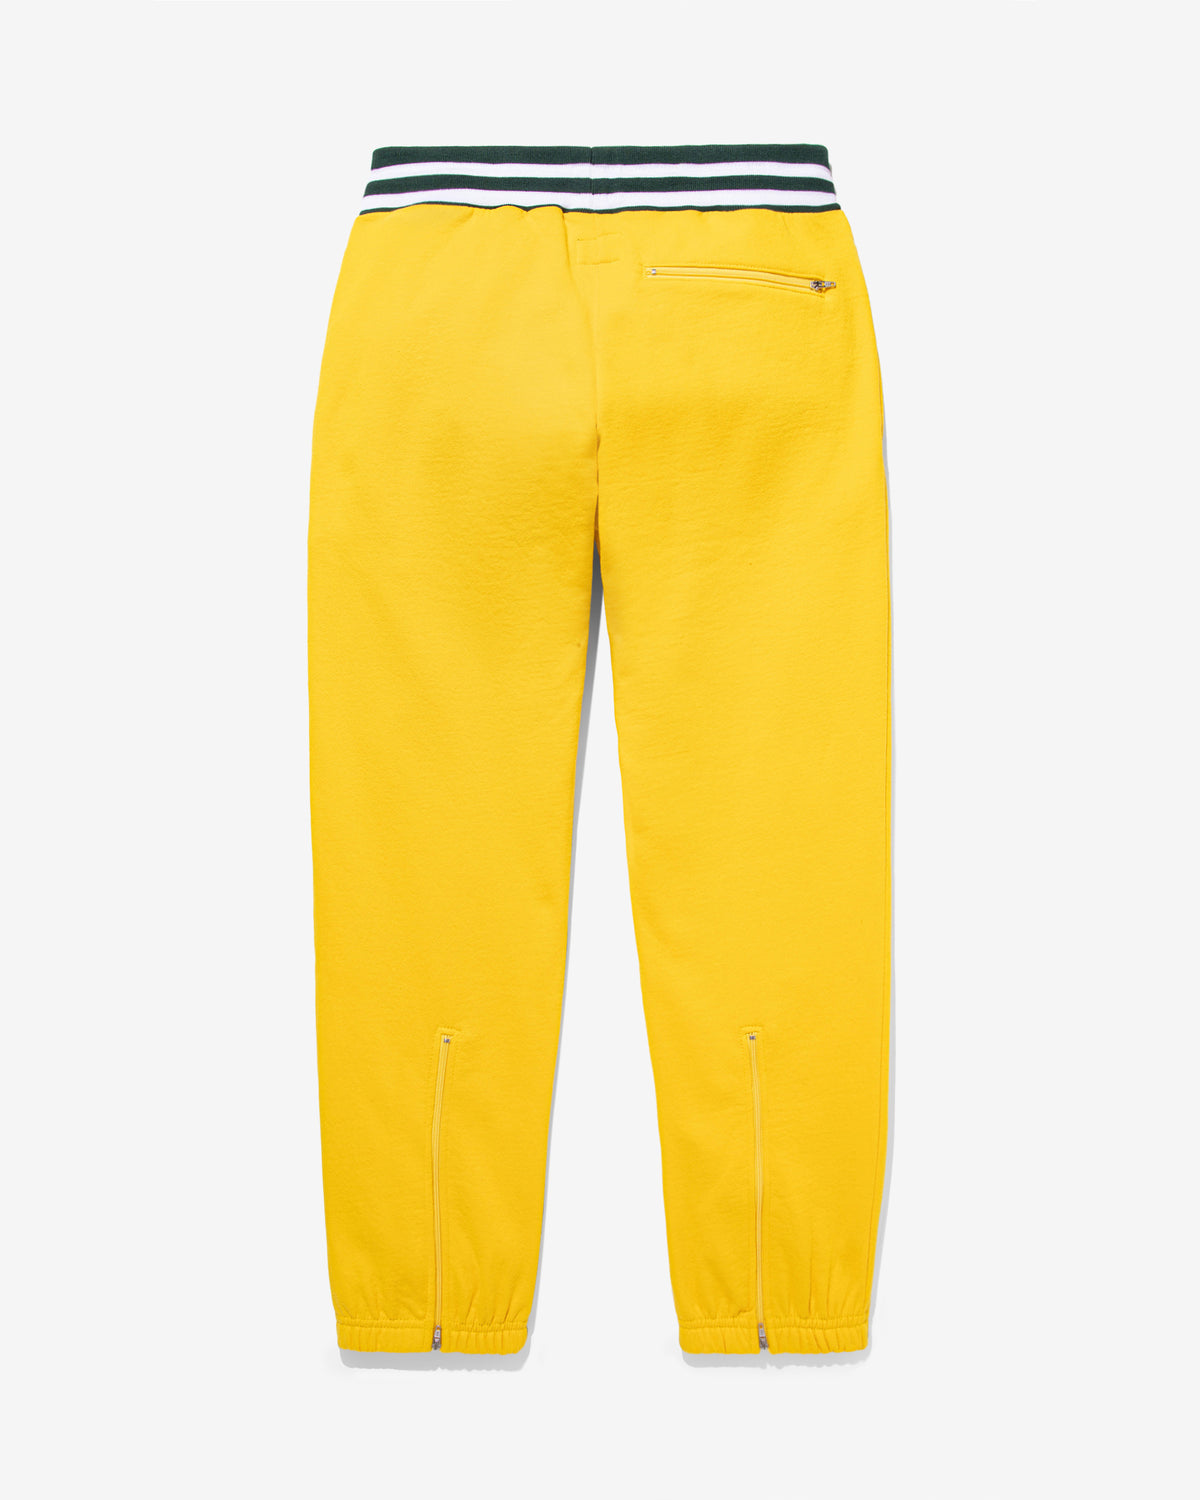 NIKE CLOTHING NSP Yellow Track Pant - Mens from PILOT UK